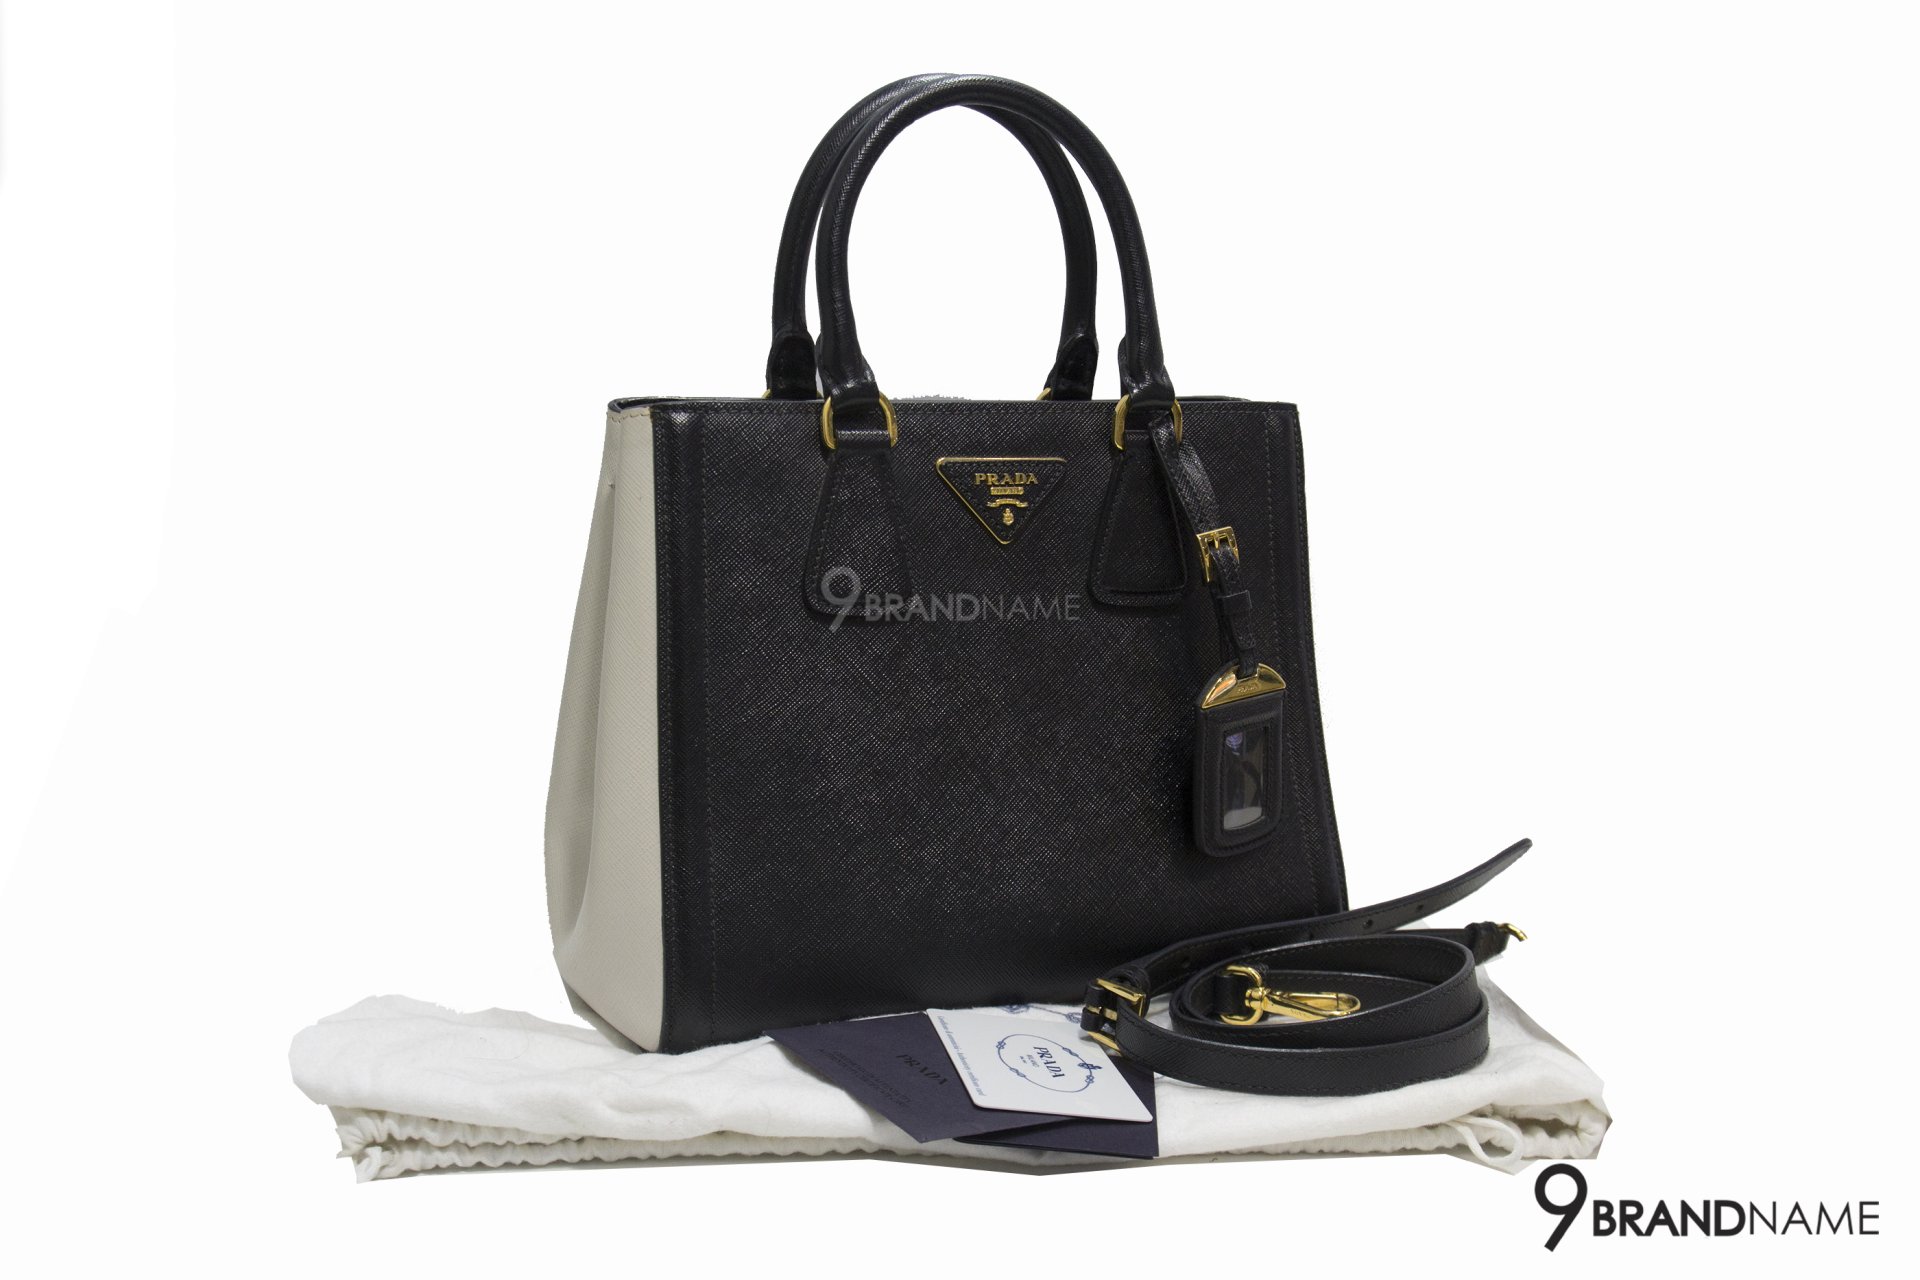 PRADA Saffiano Double Zip Crossbody Bag Black 618296